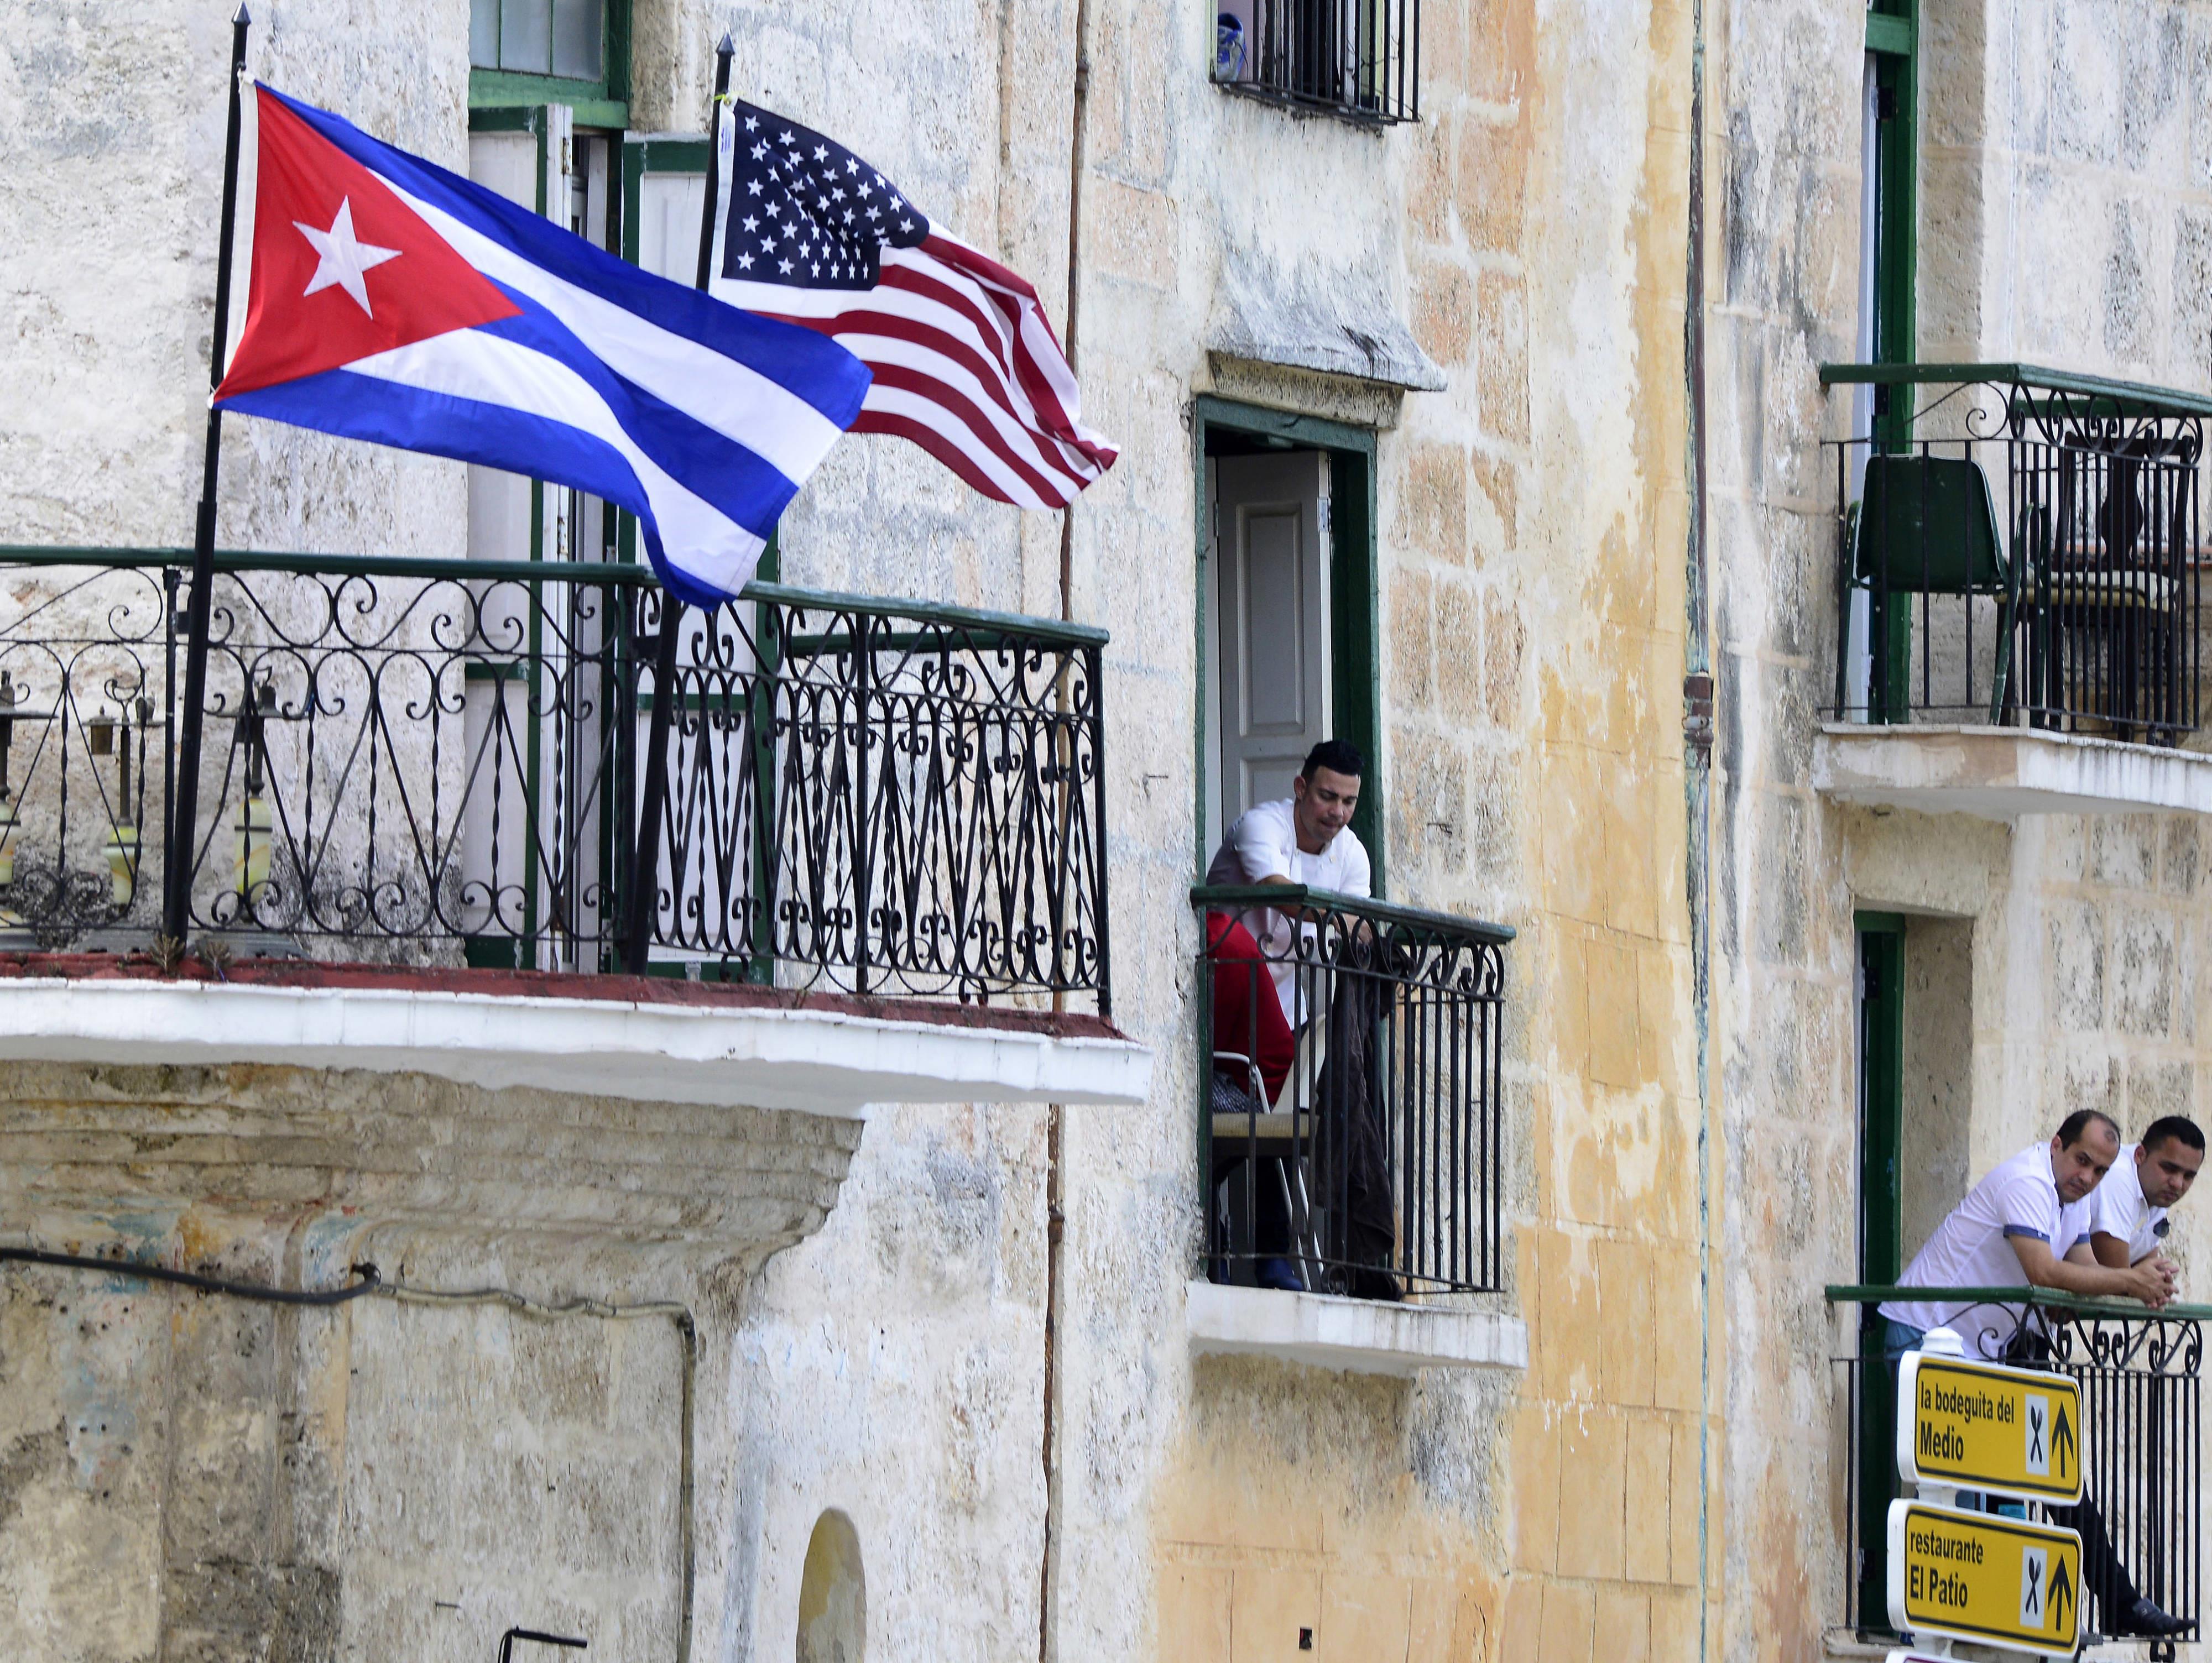 Life style in Havana, Cuban national flag, flag of the USA